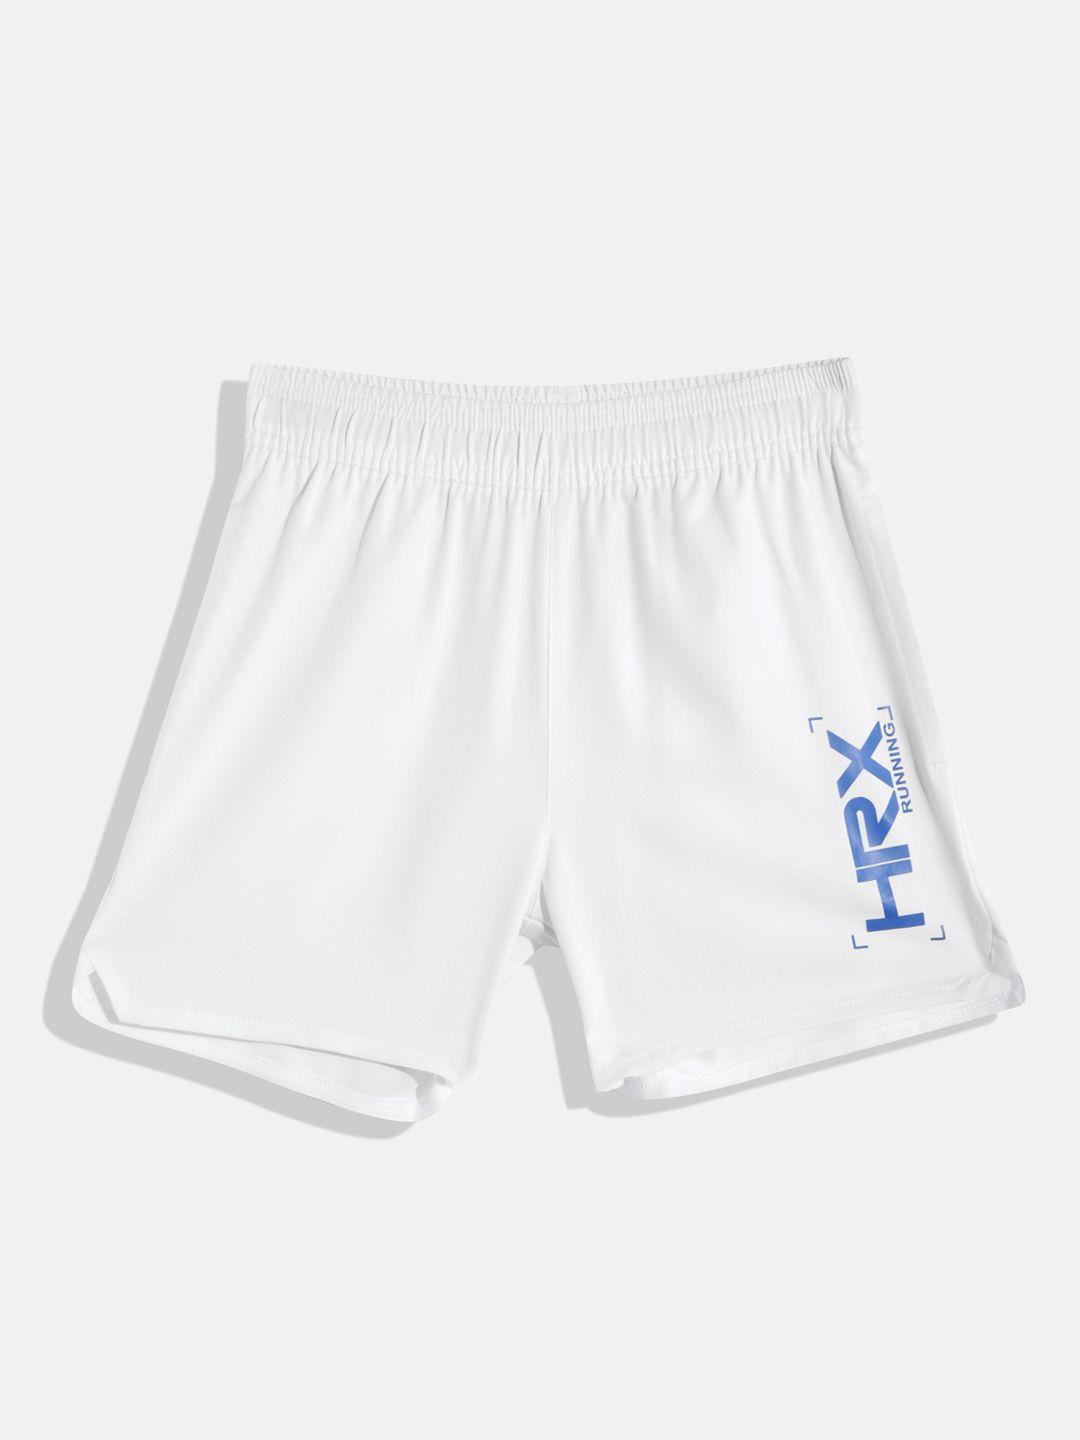 hrx by hrithik roshan boys typography printed rapid-dry sports shorts